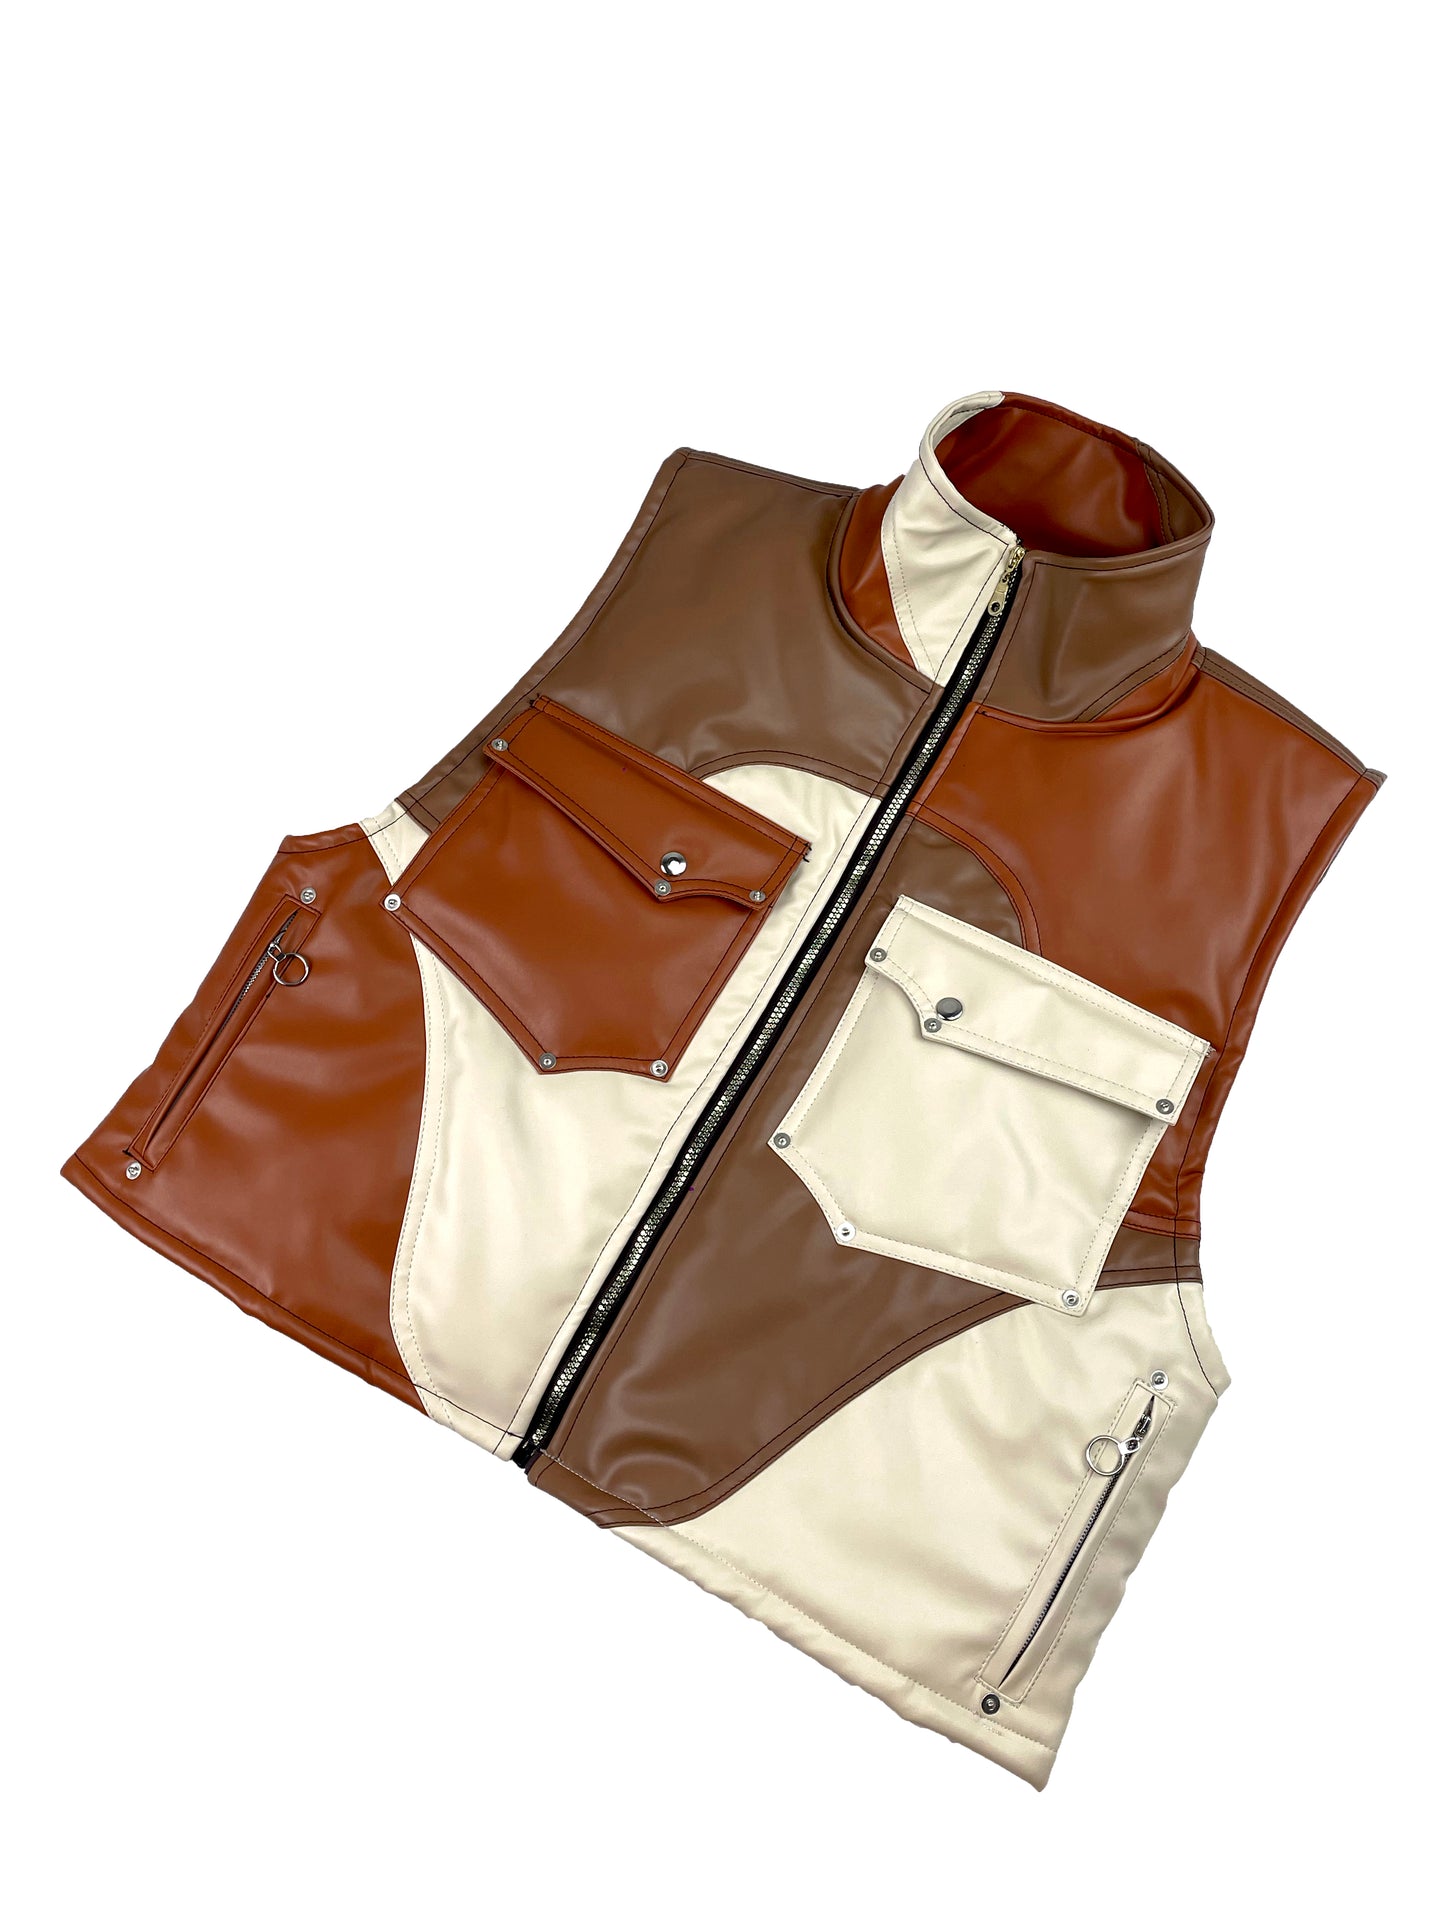 COKLATERIA - Leather Puffer Vest